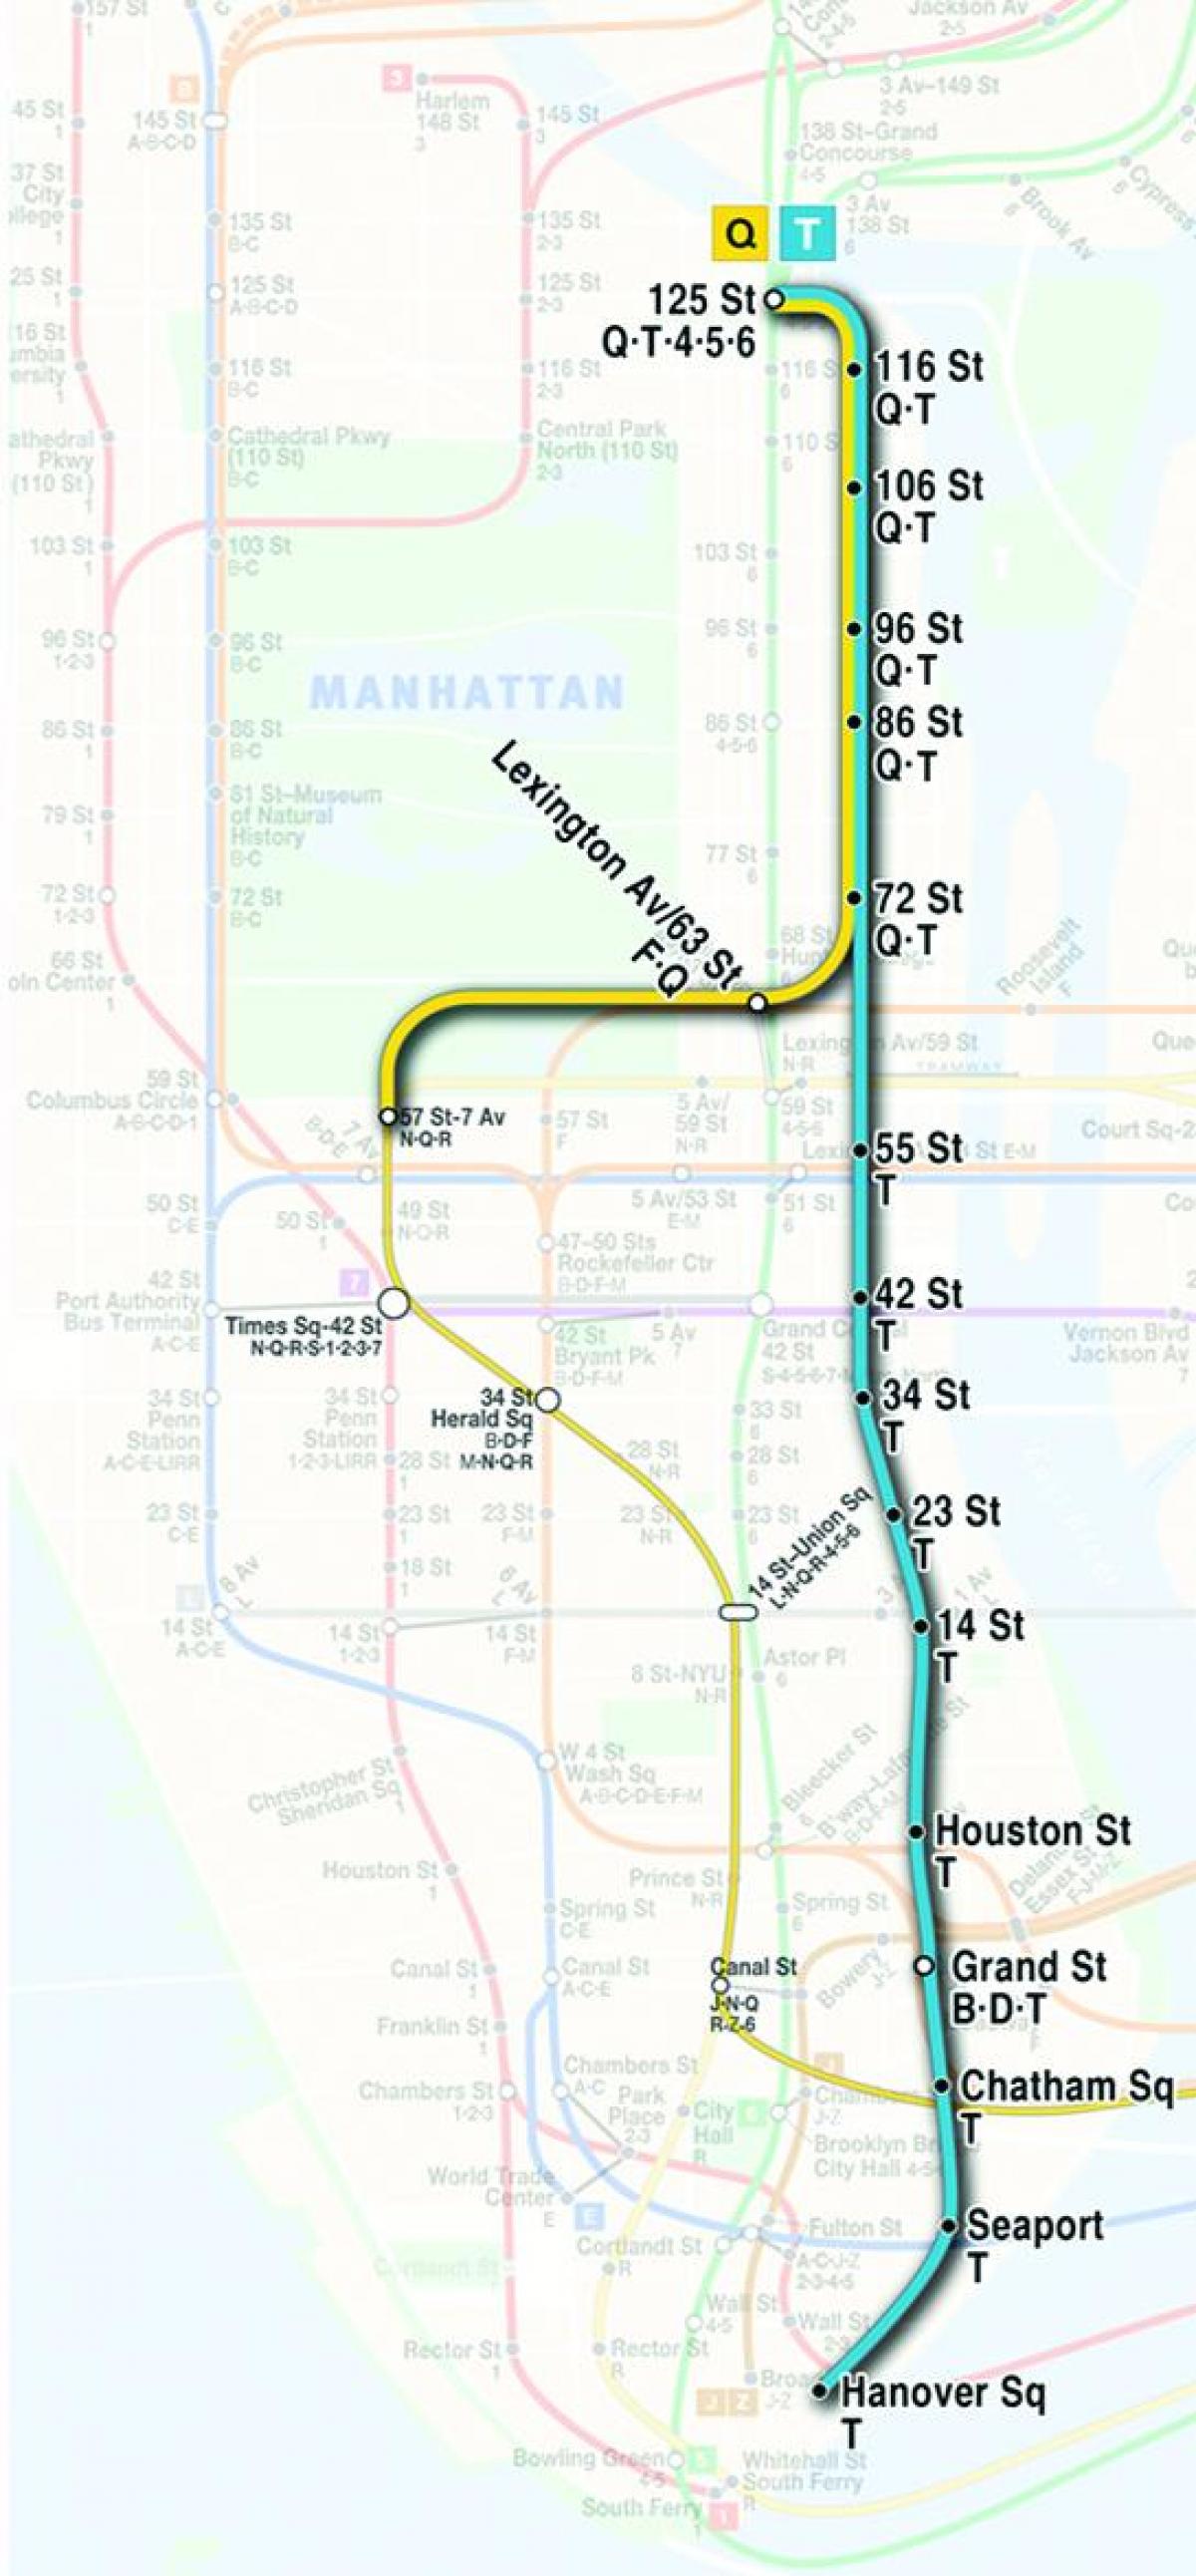 mapa second avenue metro